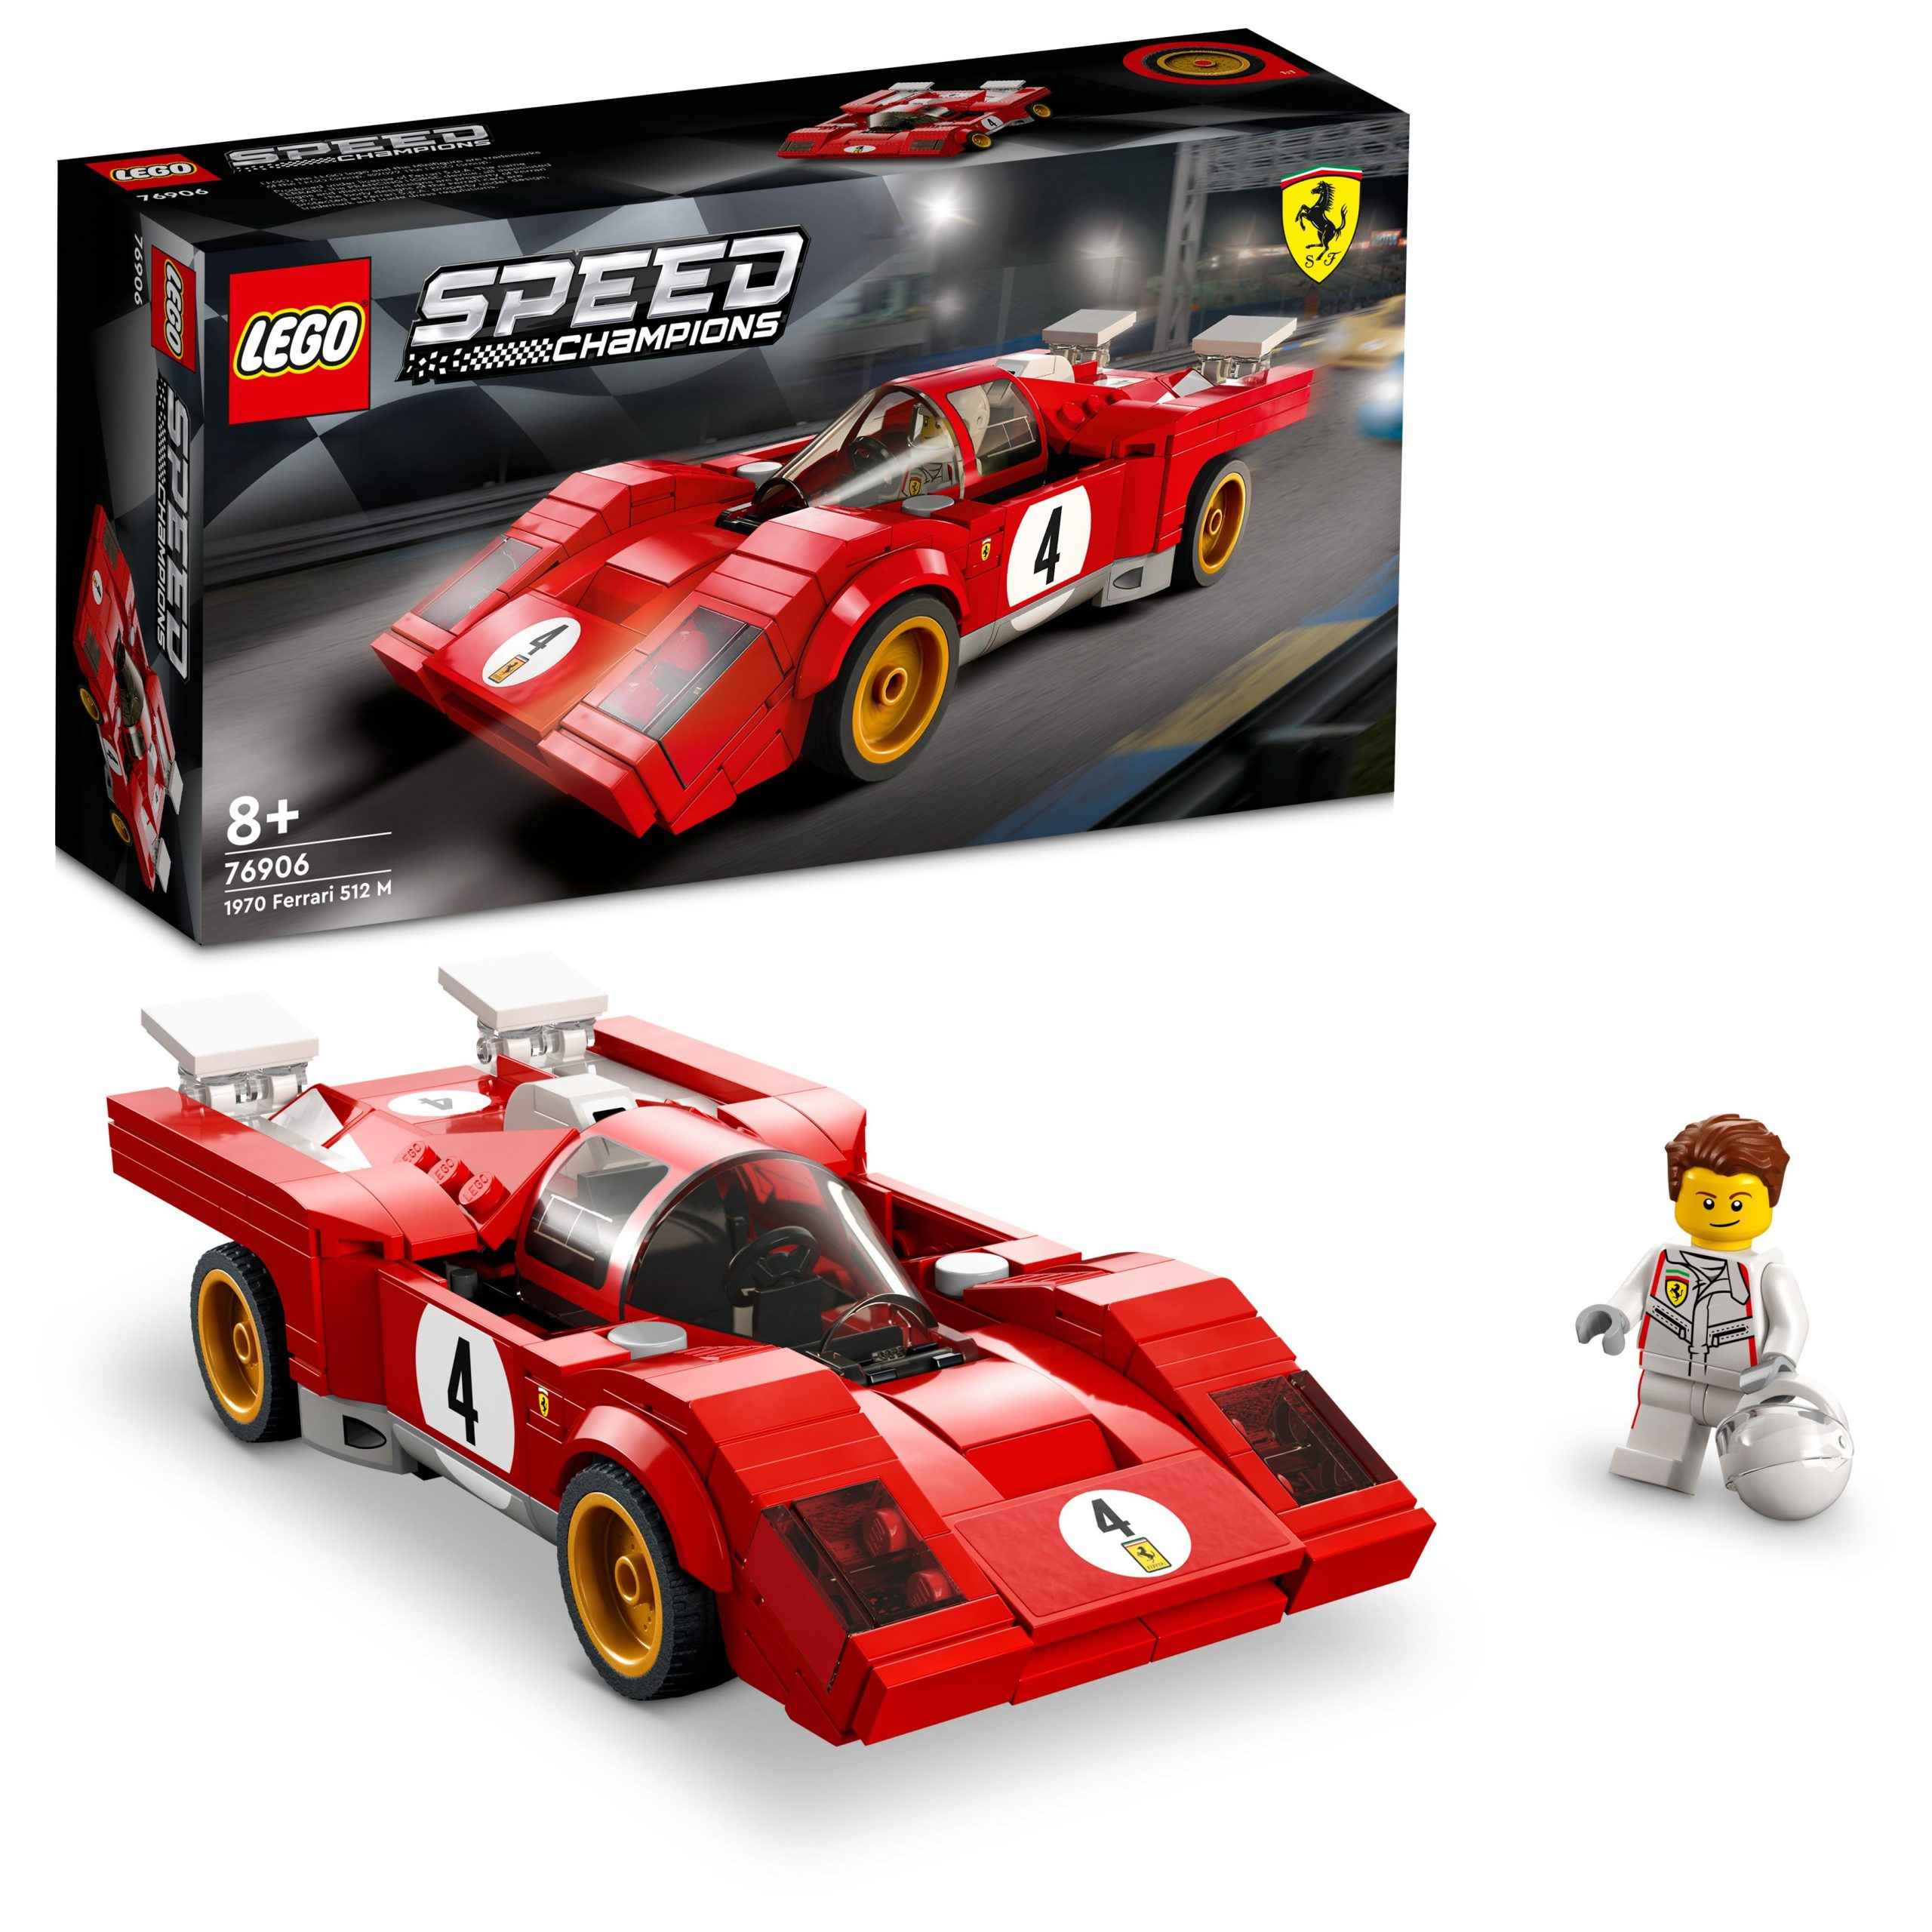 LEGO Speed Champions 1970 Ferrari 512 M 76906 - LEGO, LEGO Speed Champions